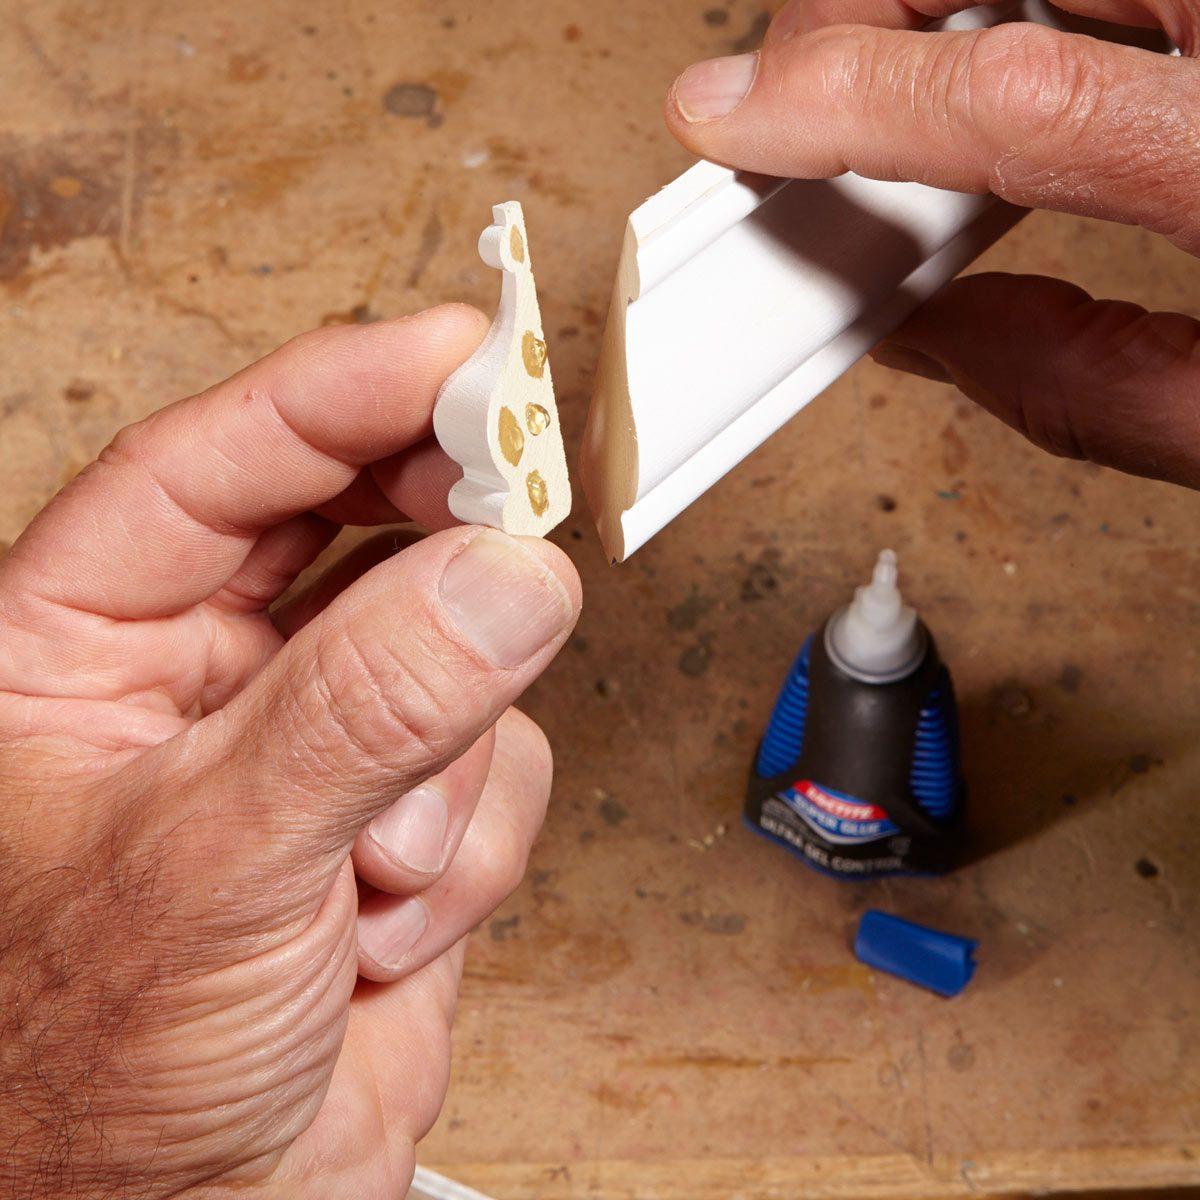 How To Fix a Stuck Zipper: 5 Easy Methods That Work - Bob Vila